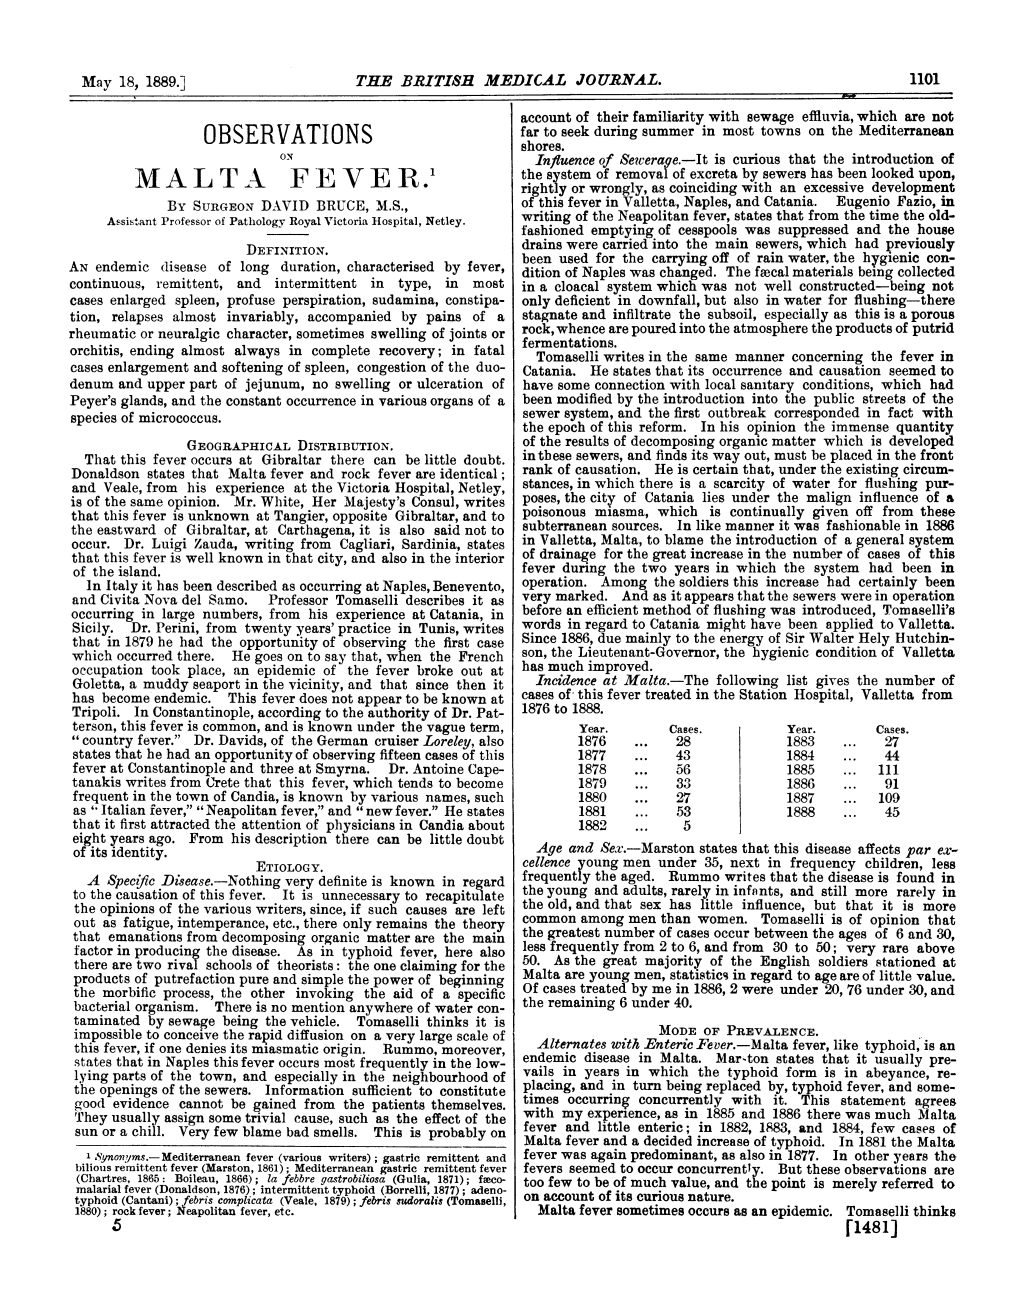 Observations Malta Fever.1